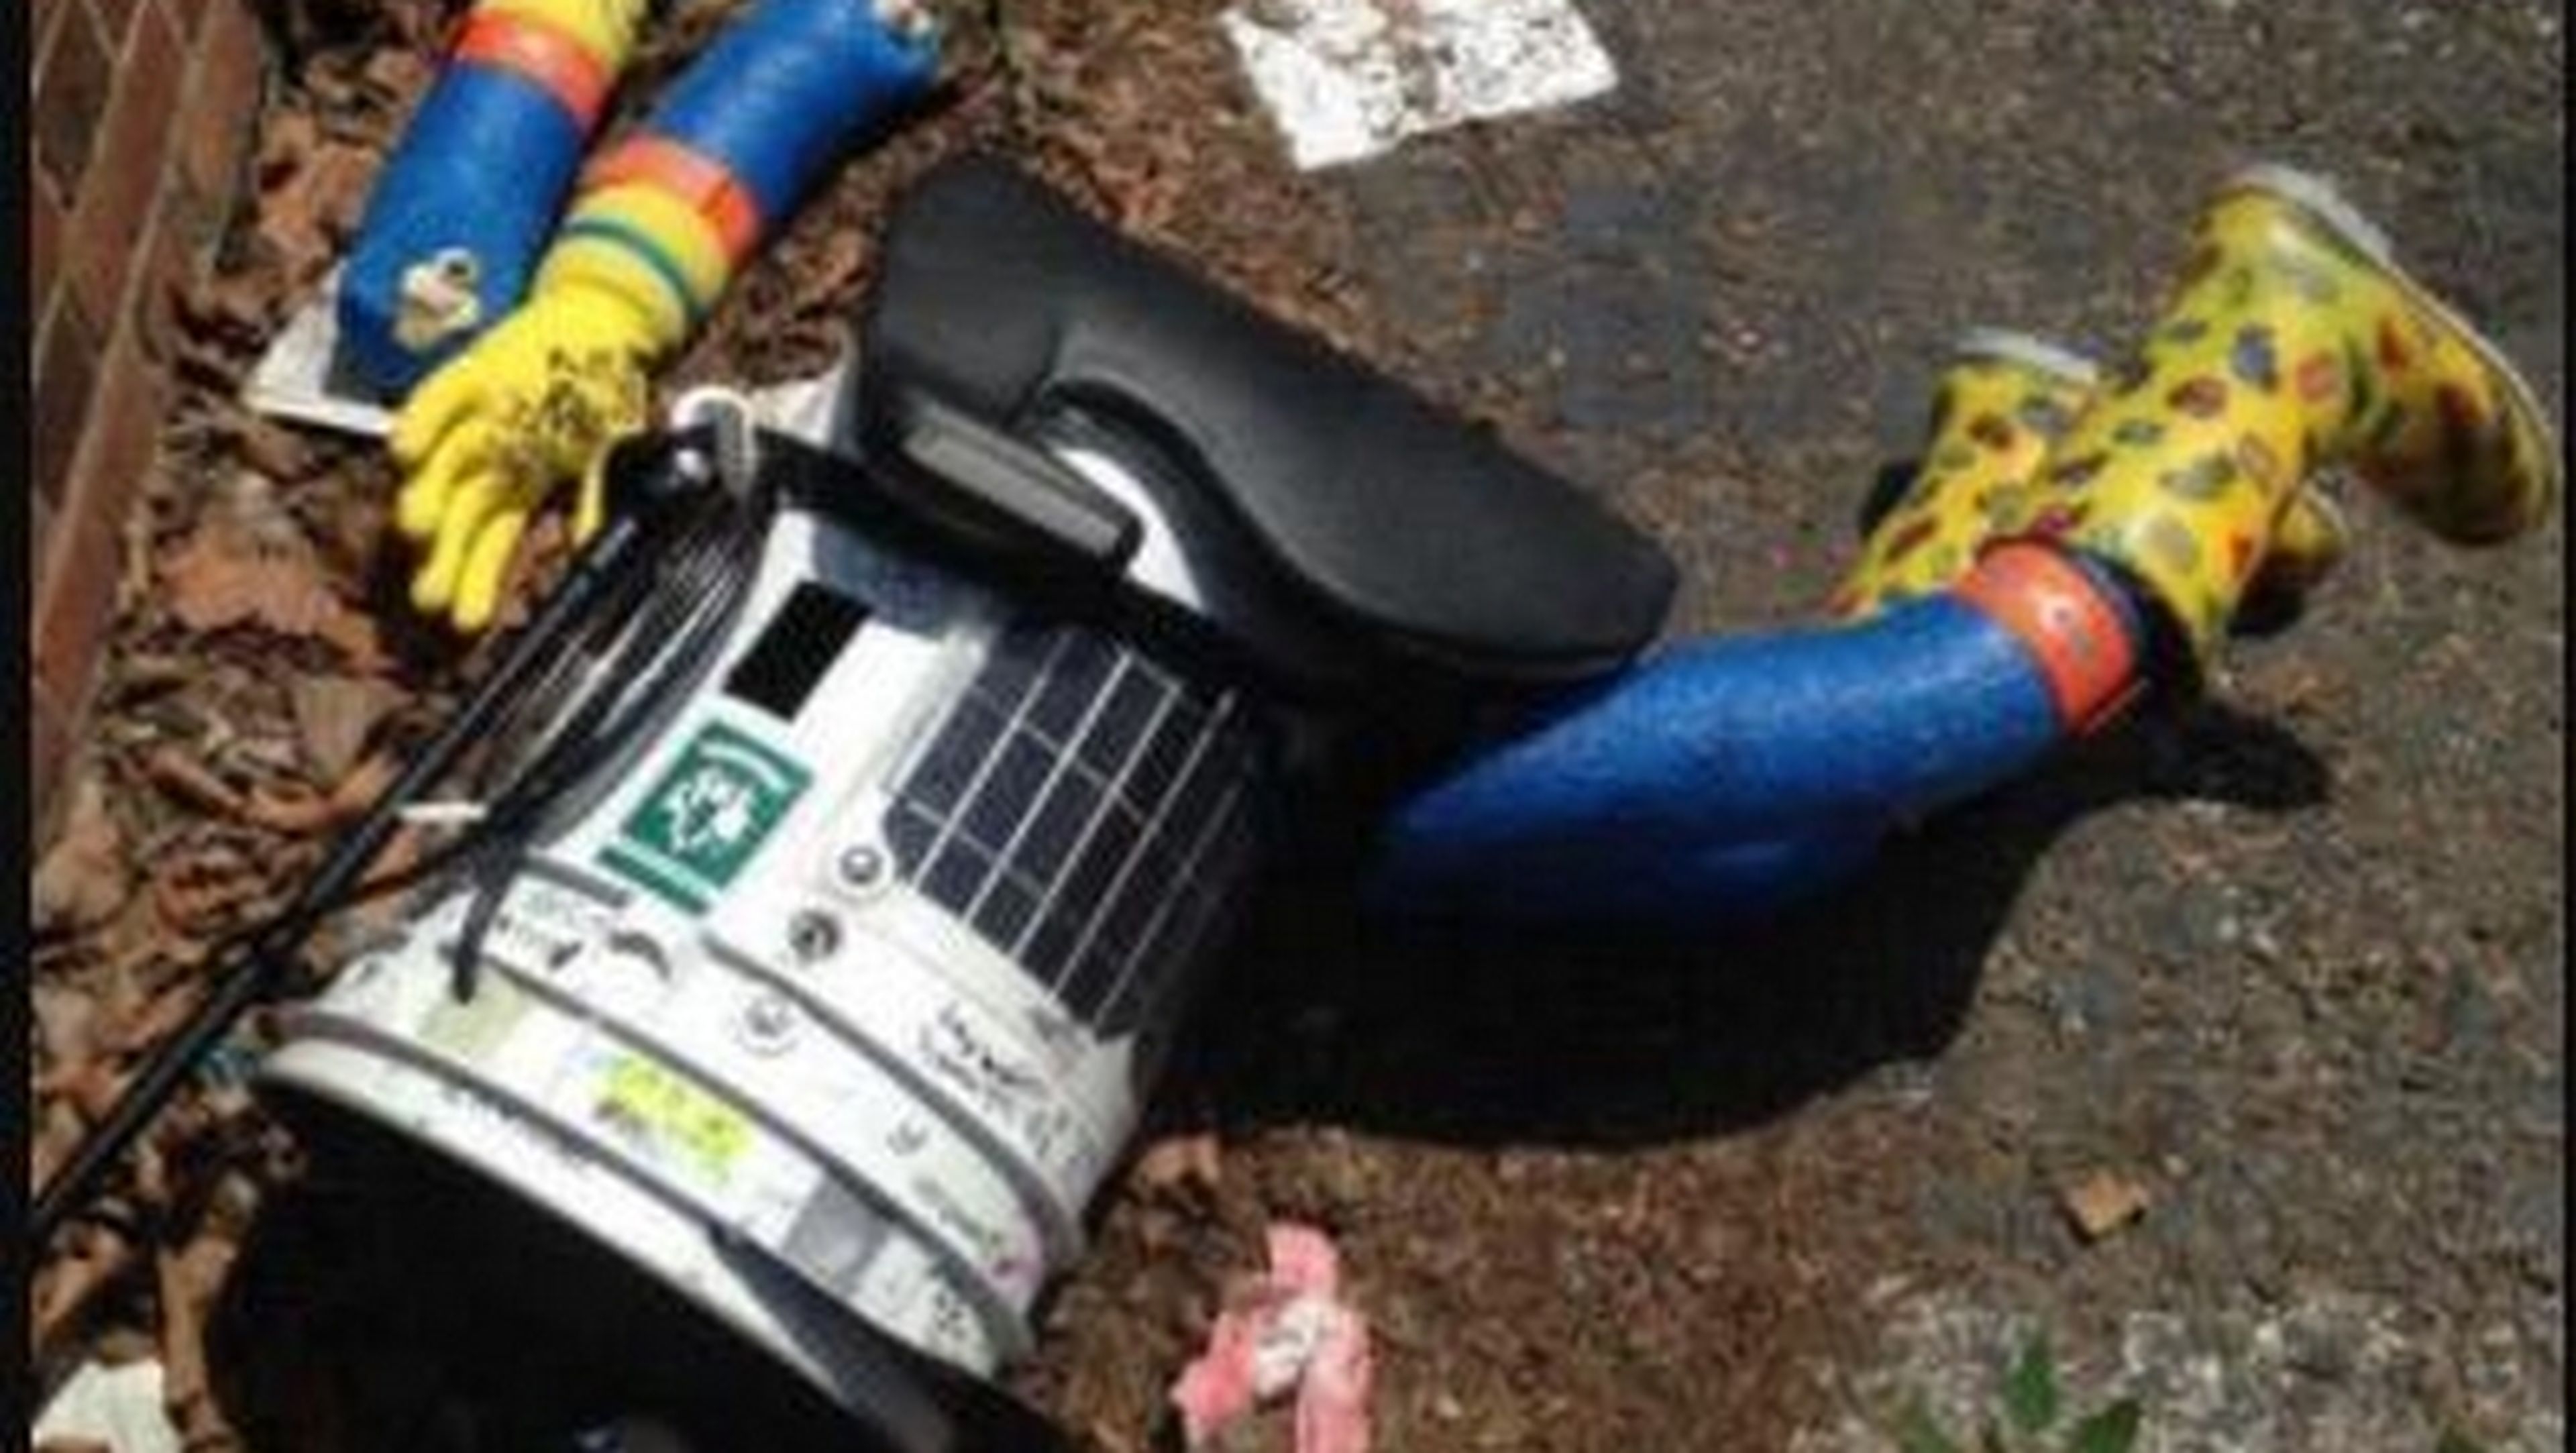 HitchBOT el robot autoestopista cruelmente asesinado en Filadelfia.